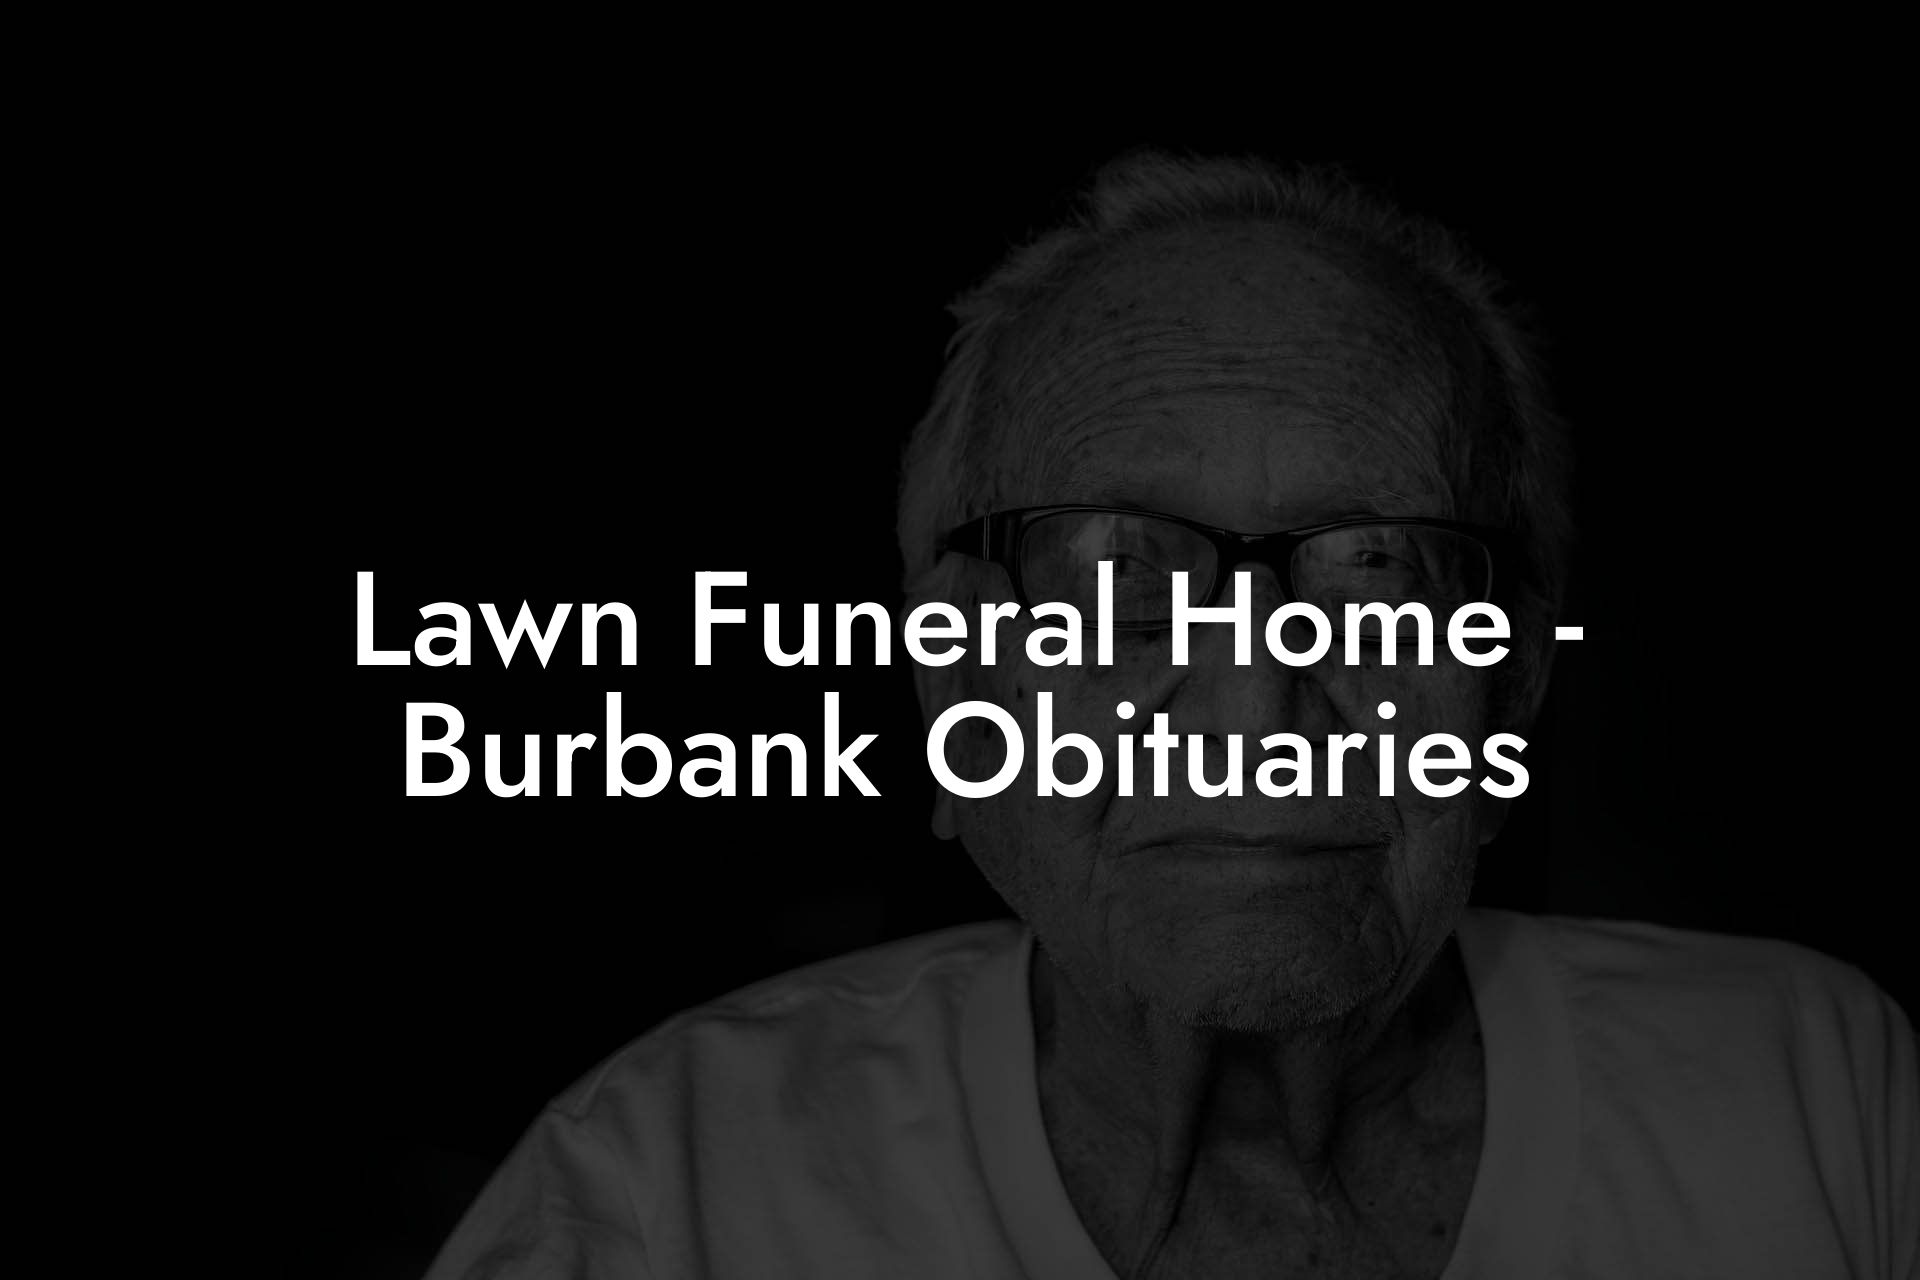 Lawn Funeral Home - Burbank Obituaries